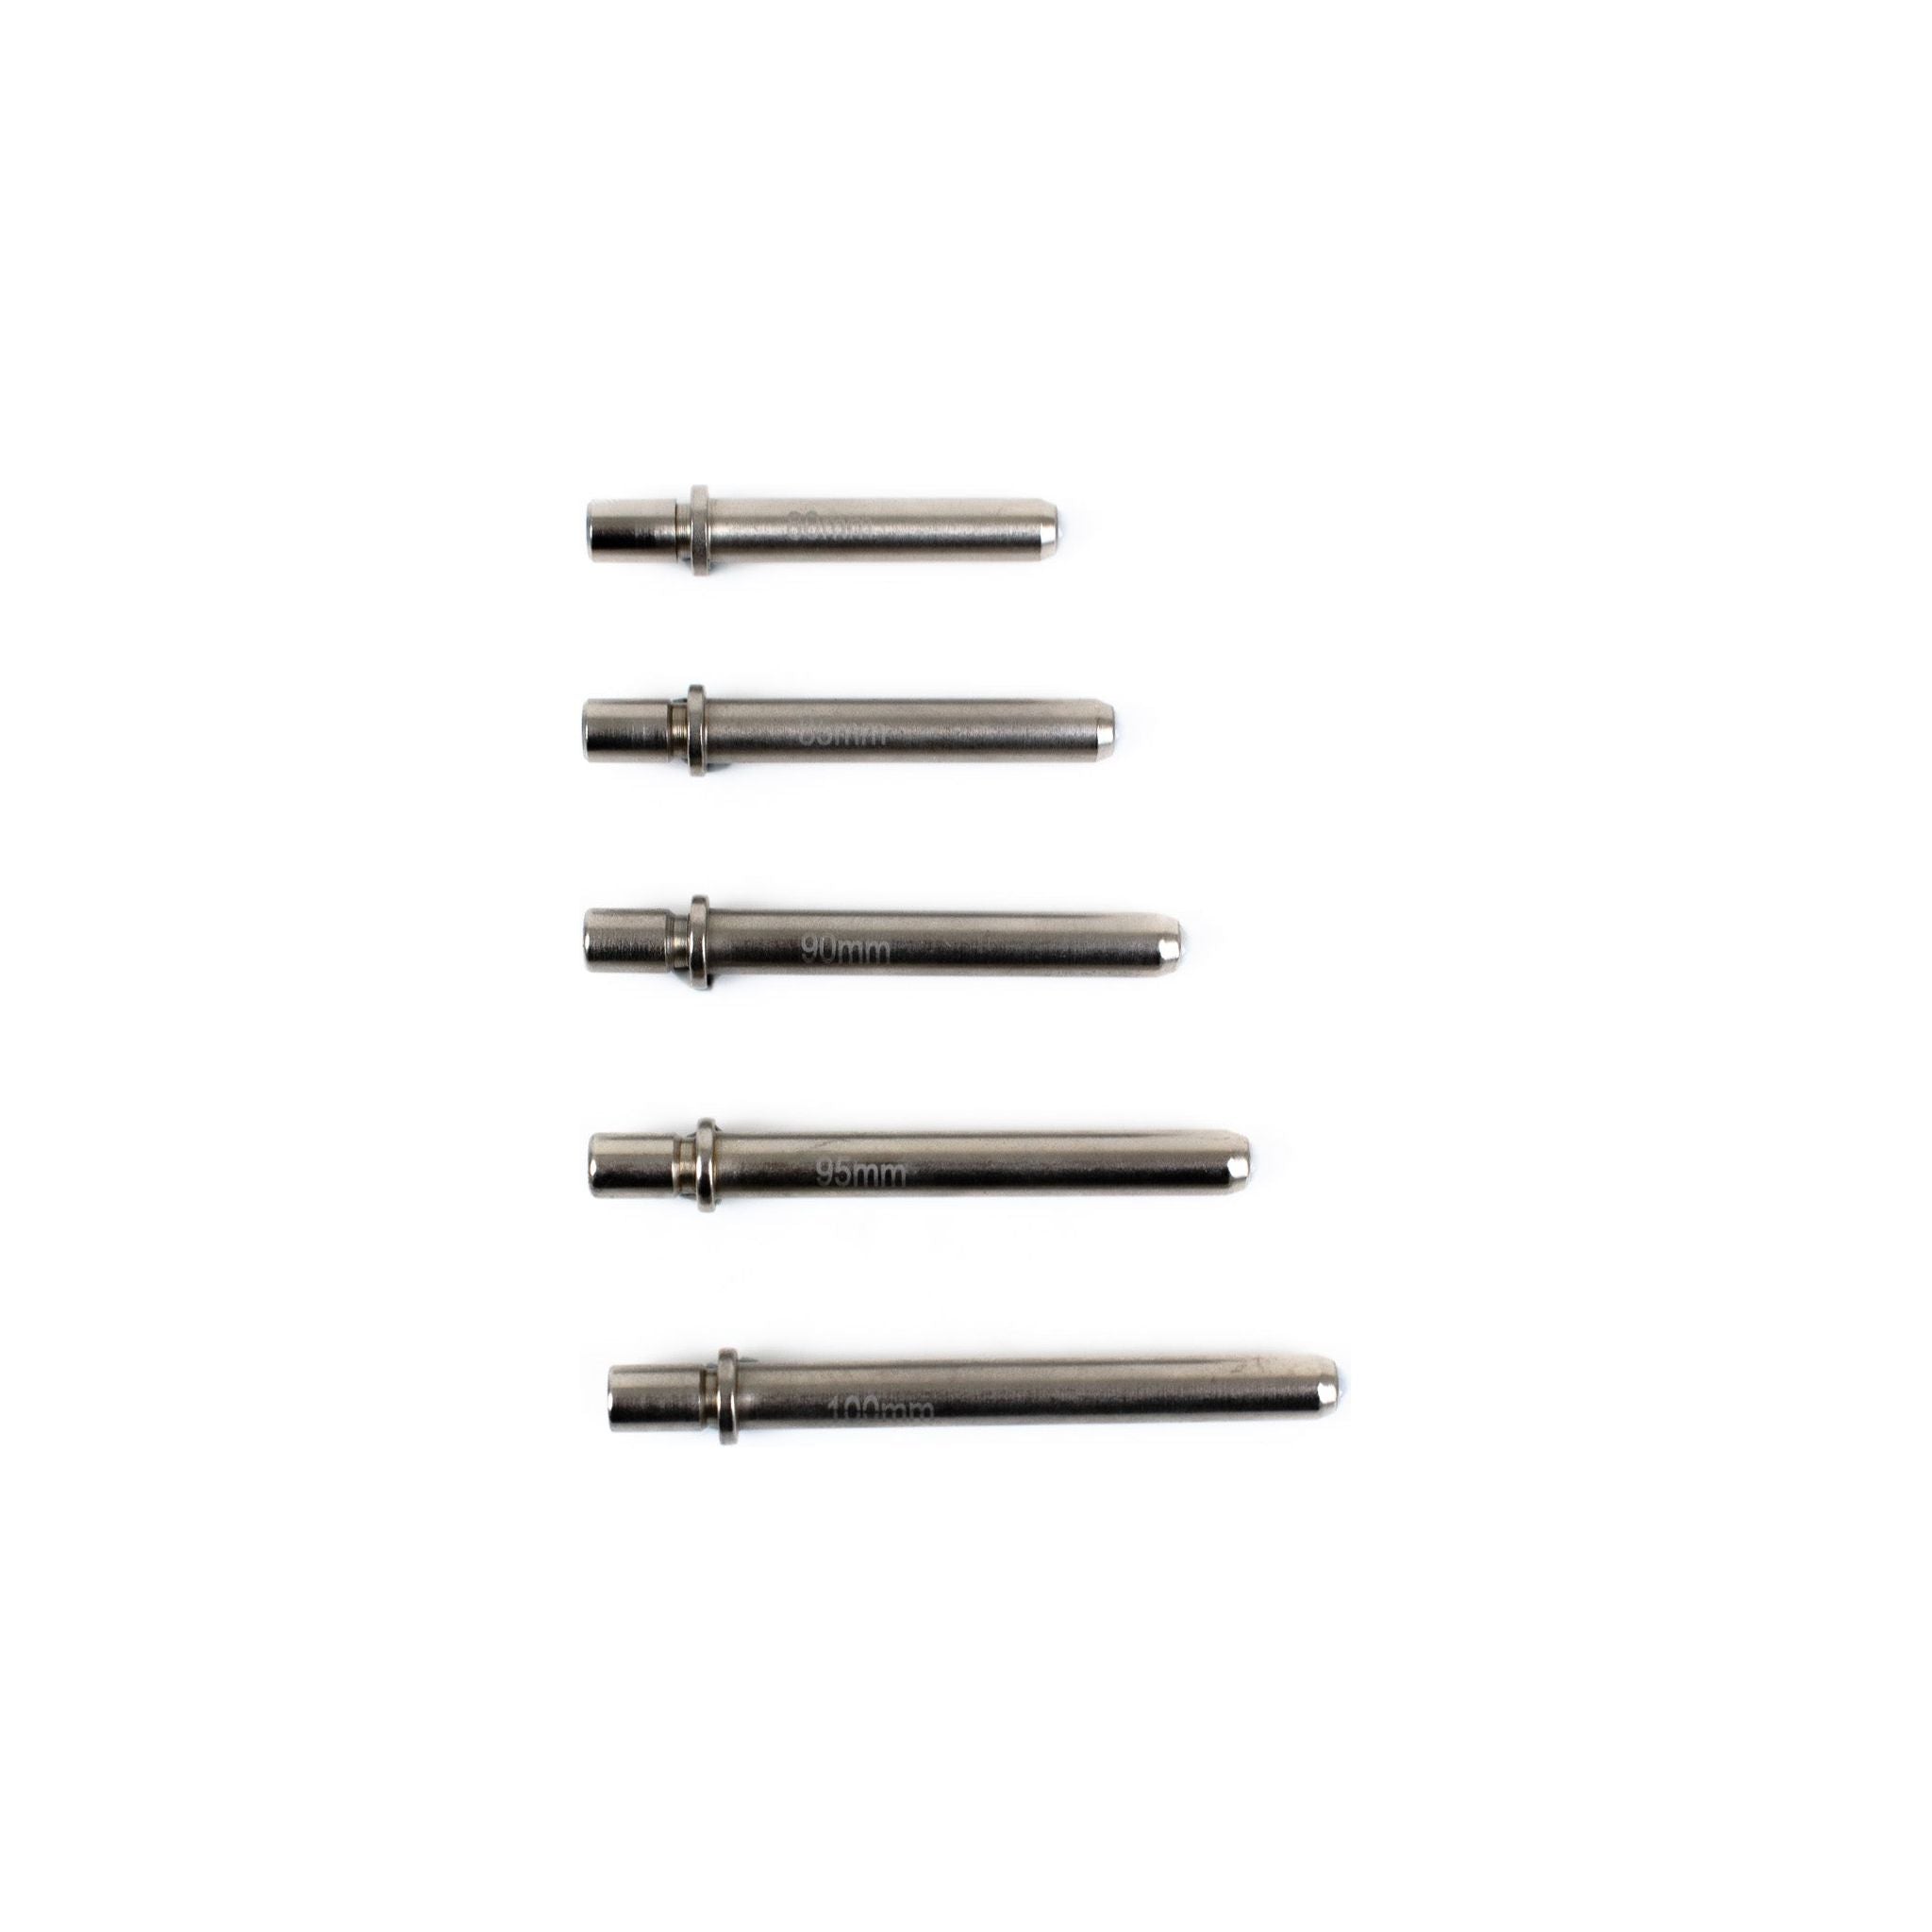 Insize Digital Bore Gauge 50-100 mm Range Series 2122-100A